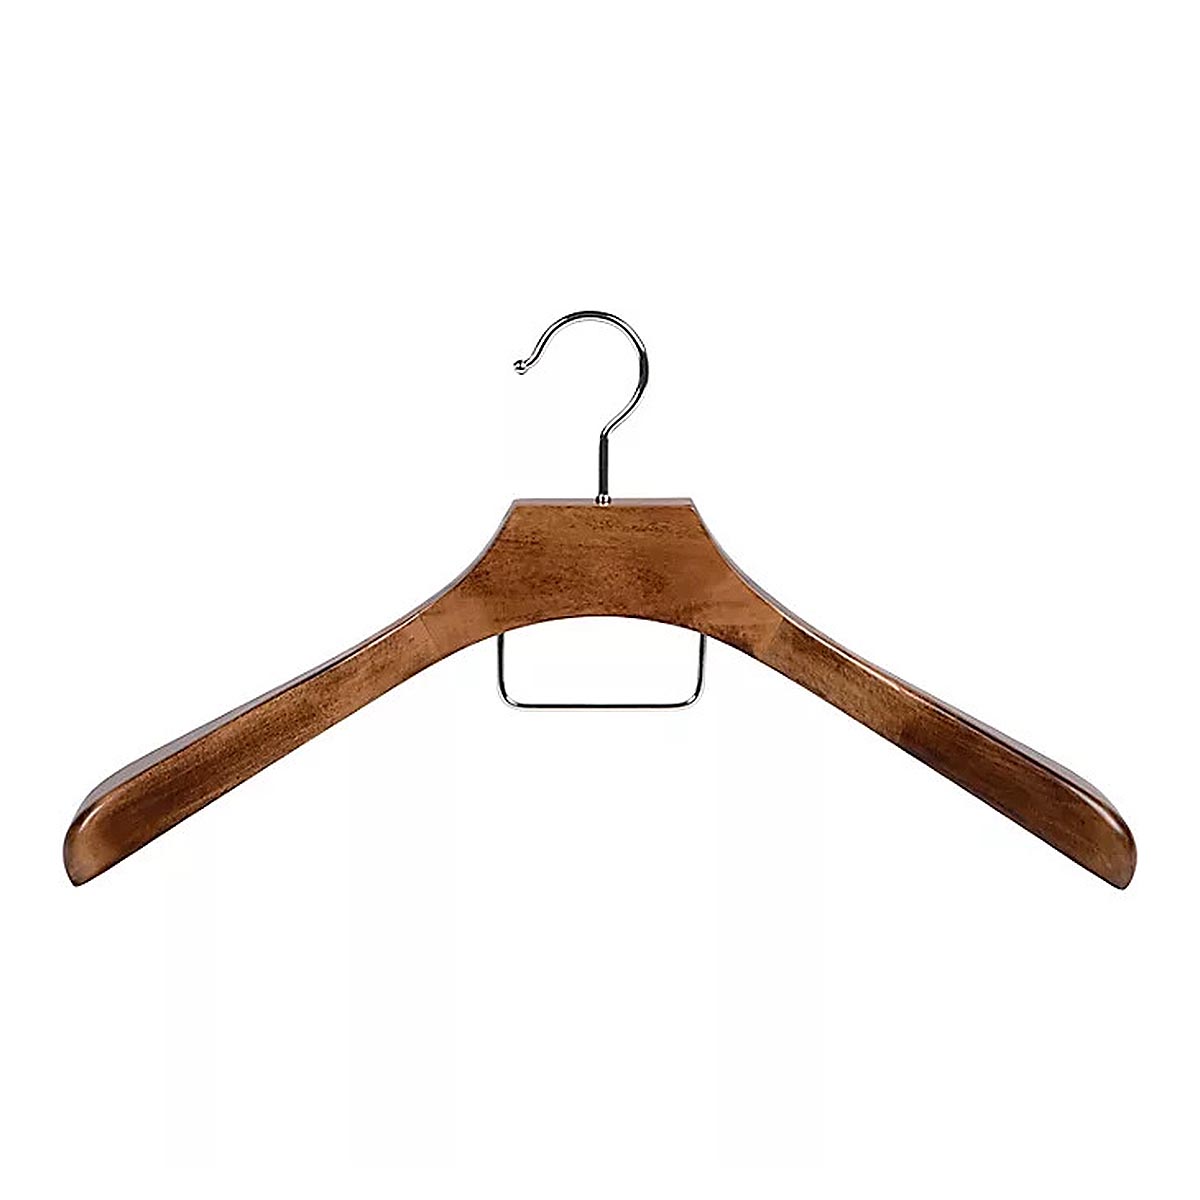 50pk Waverly Teal Velvet Hangers Non-Slip – Slim Profile, Maximize Closets